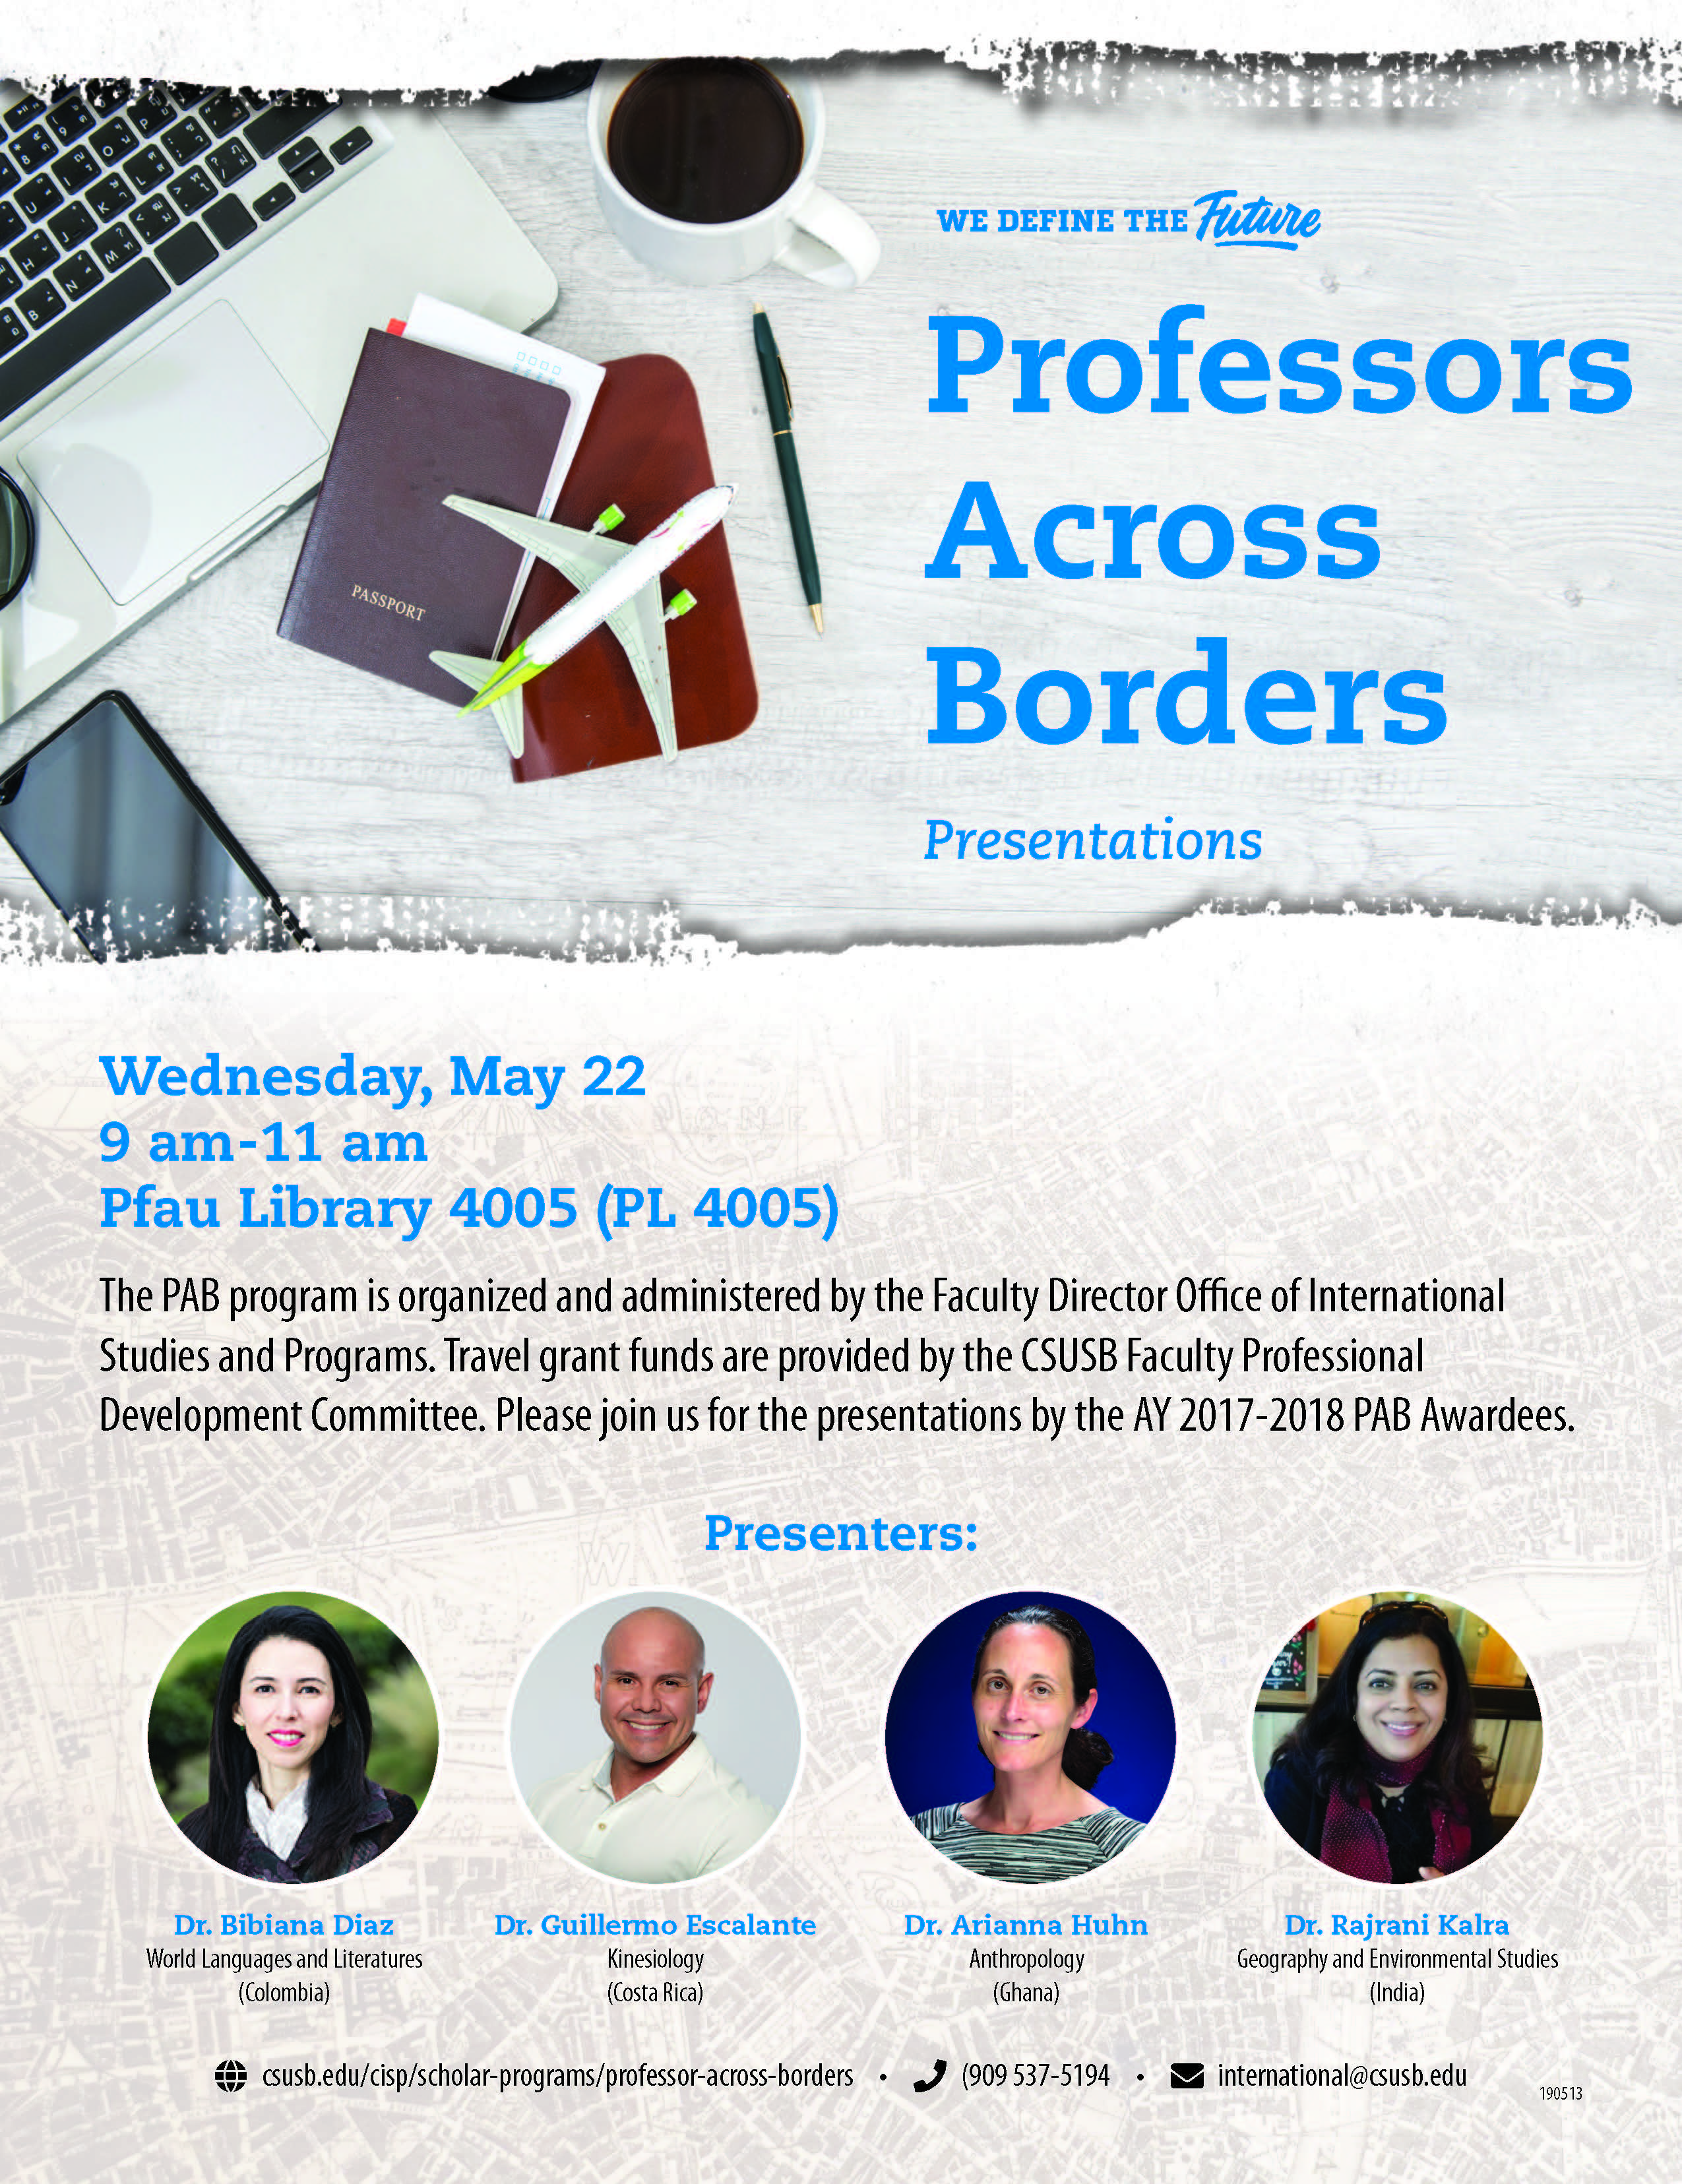 CSUSB Center for International Studies and Programs presents Professors Across Borders panel